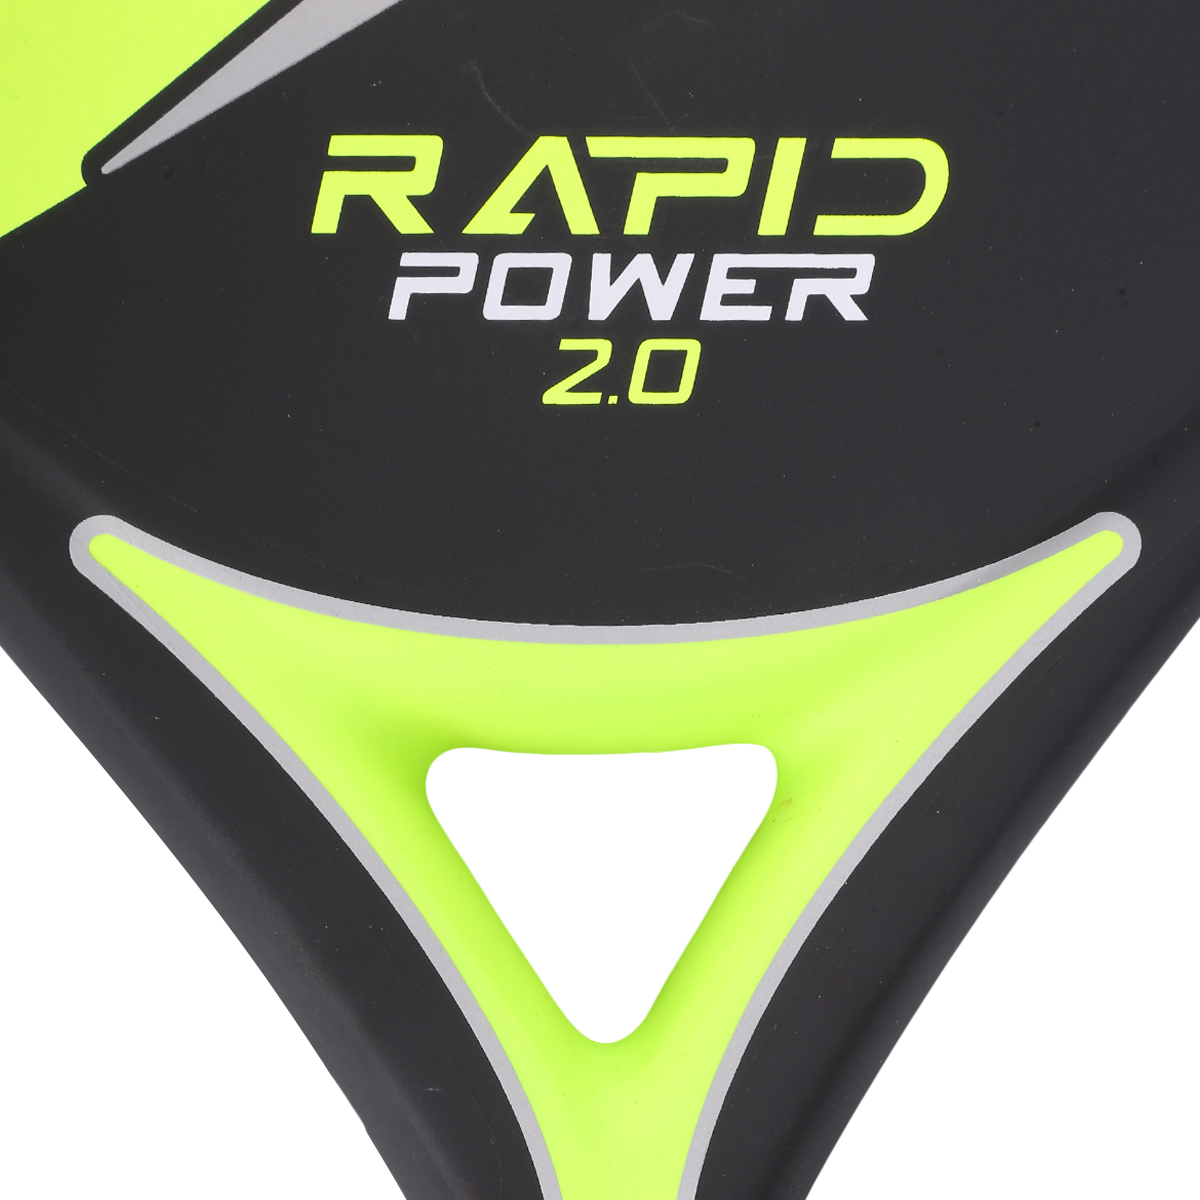 Paleta Dunlop Rapid Power 2.0,  image number null